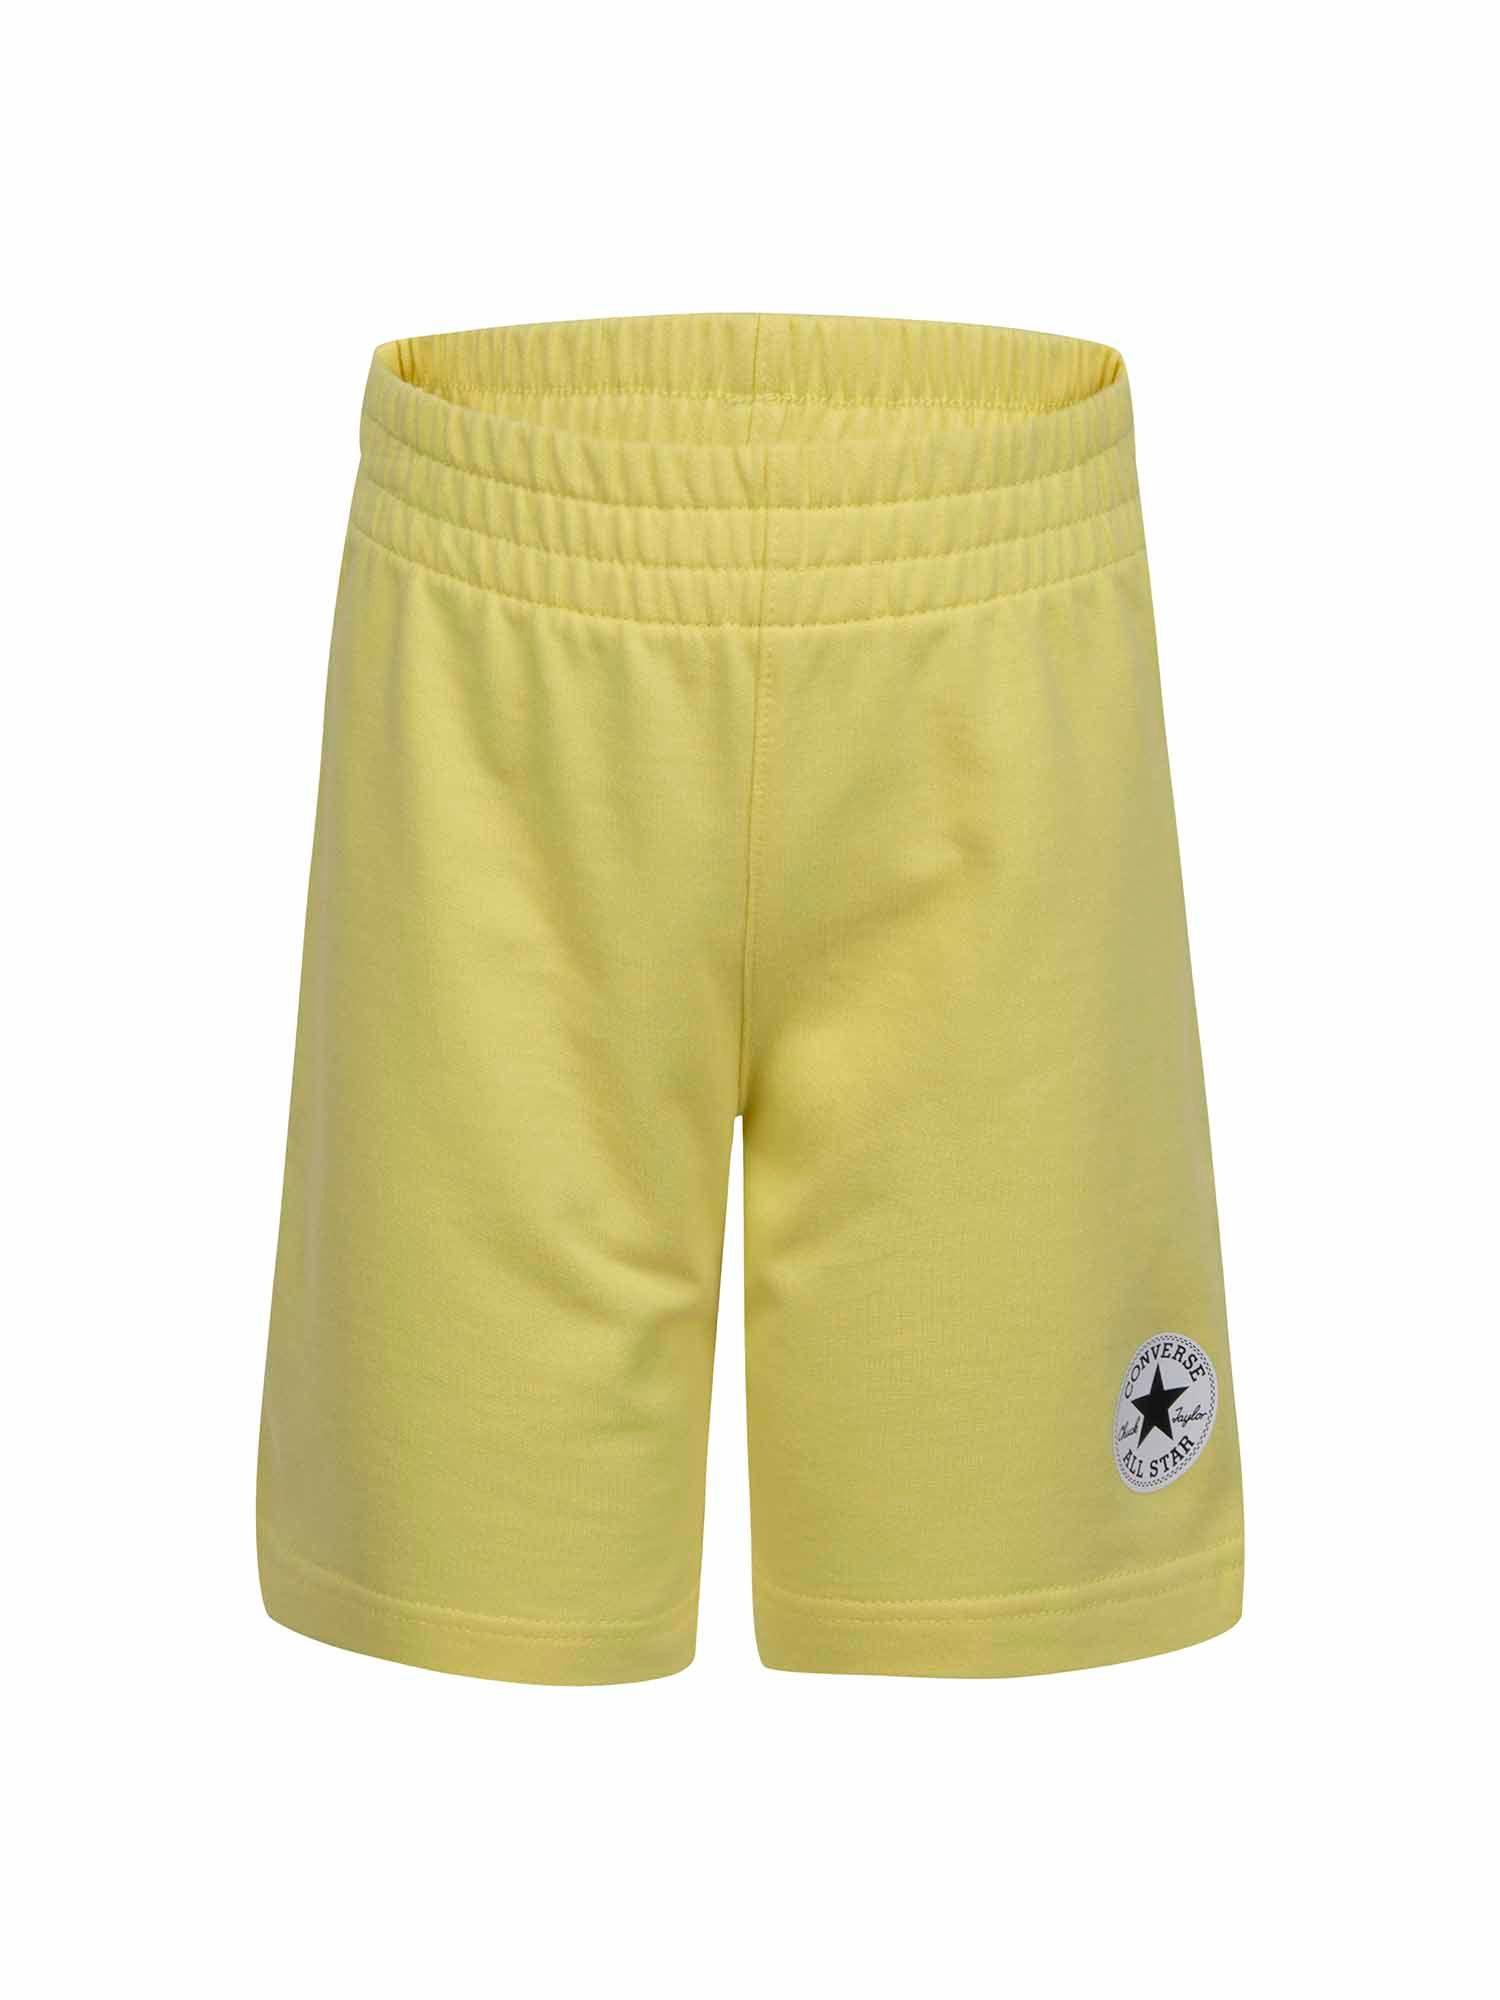 boys-yellow-solid-shorts